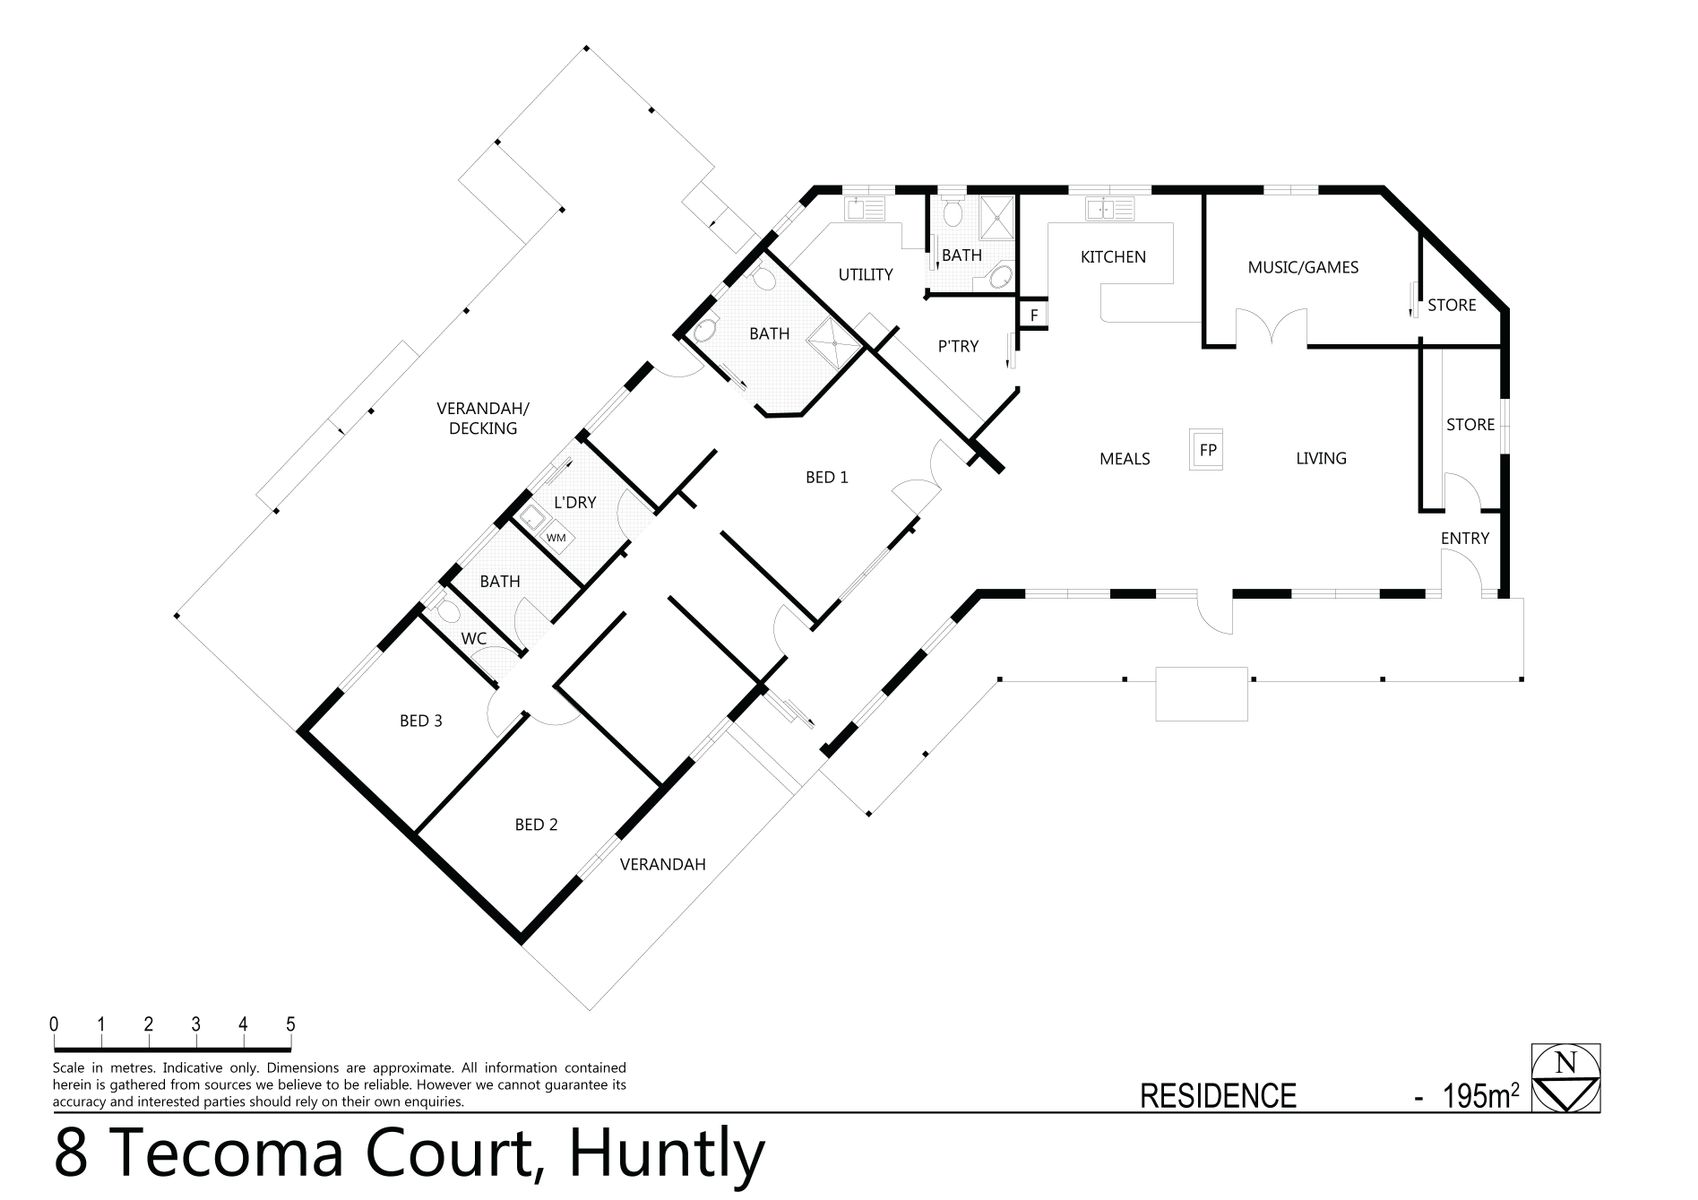 8 Tecoma Court, Huntly (07 MAY 2018) 195sqm